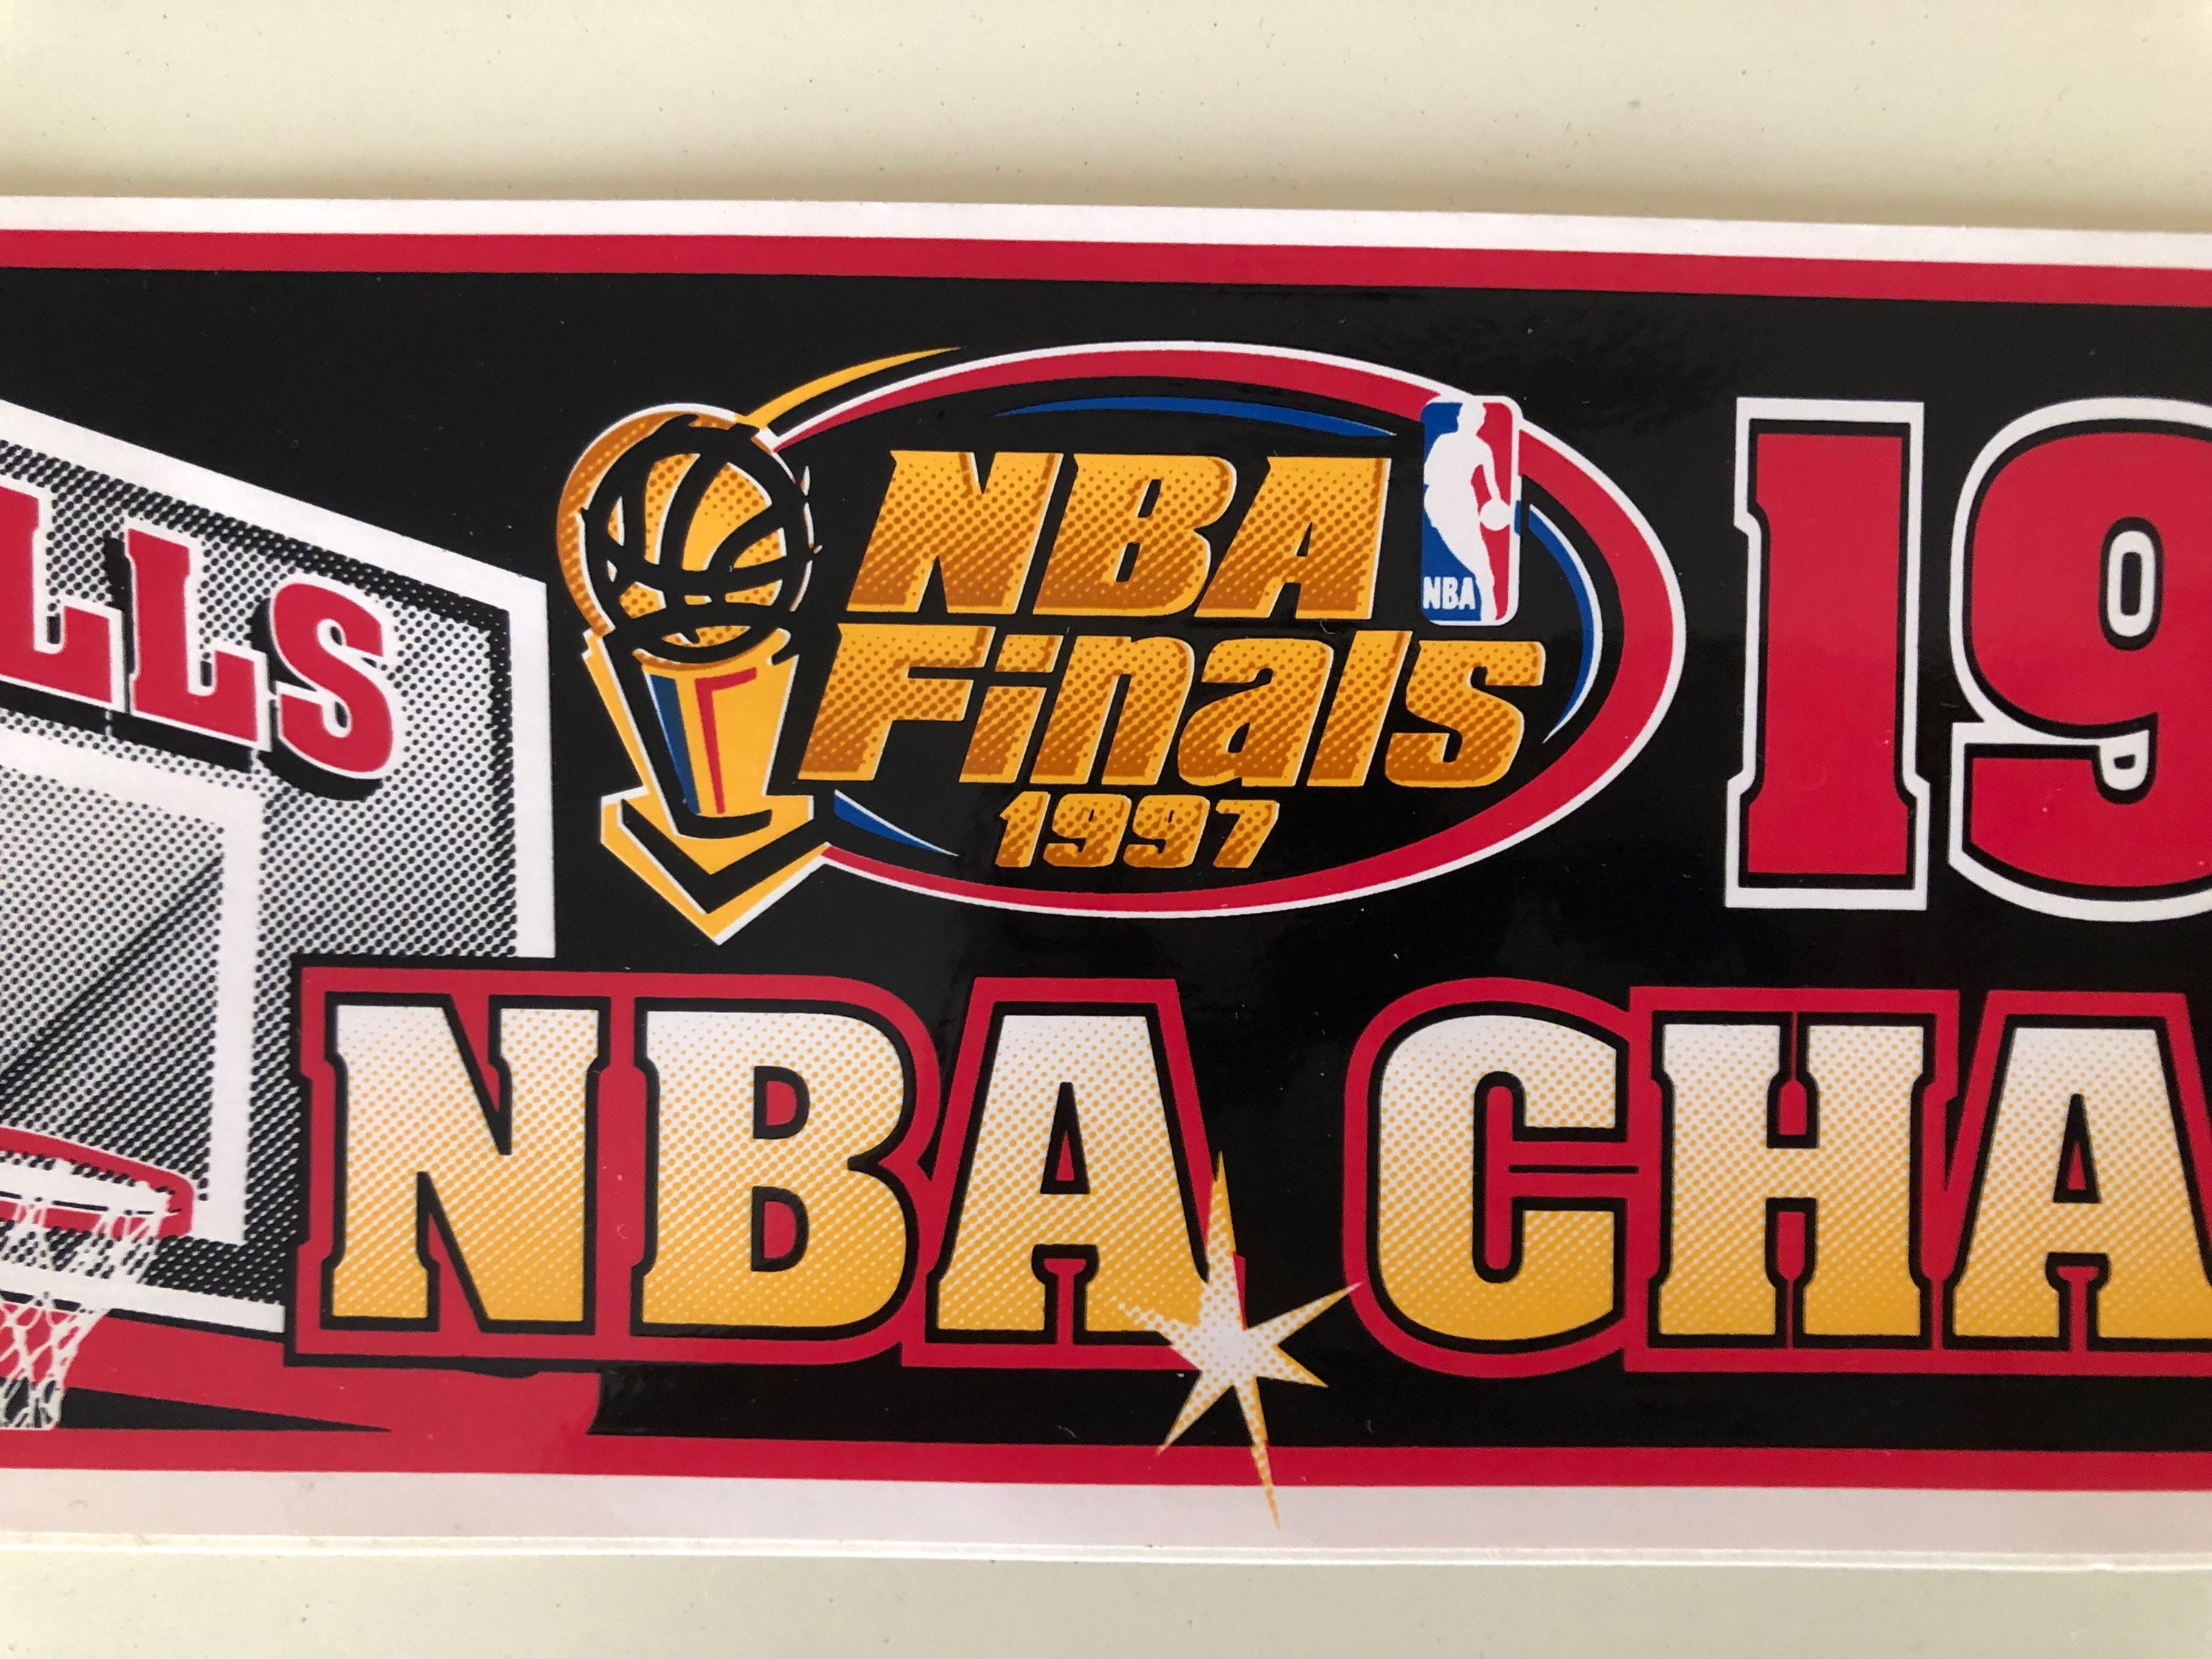 Chicago Bulls 1997 Nba World Champions Bumper Sticker Brand New Nice Very  Rare AWESOME